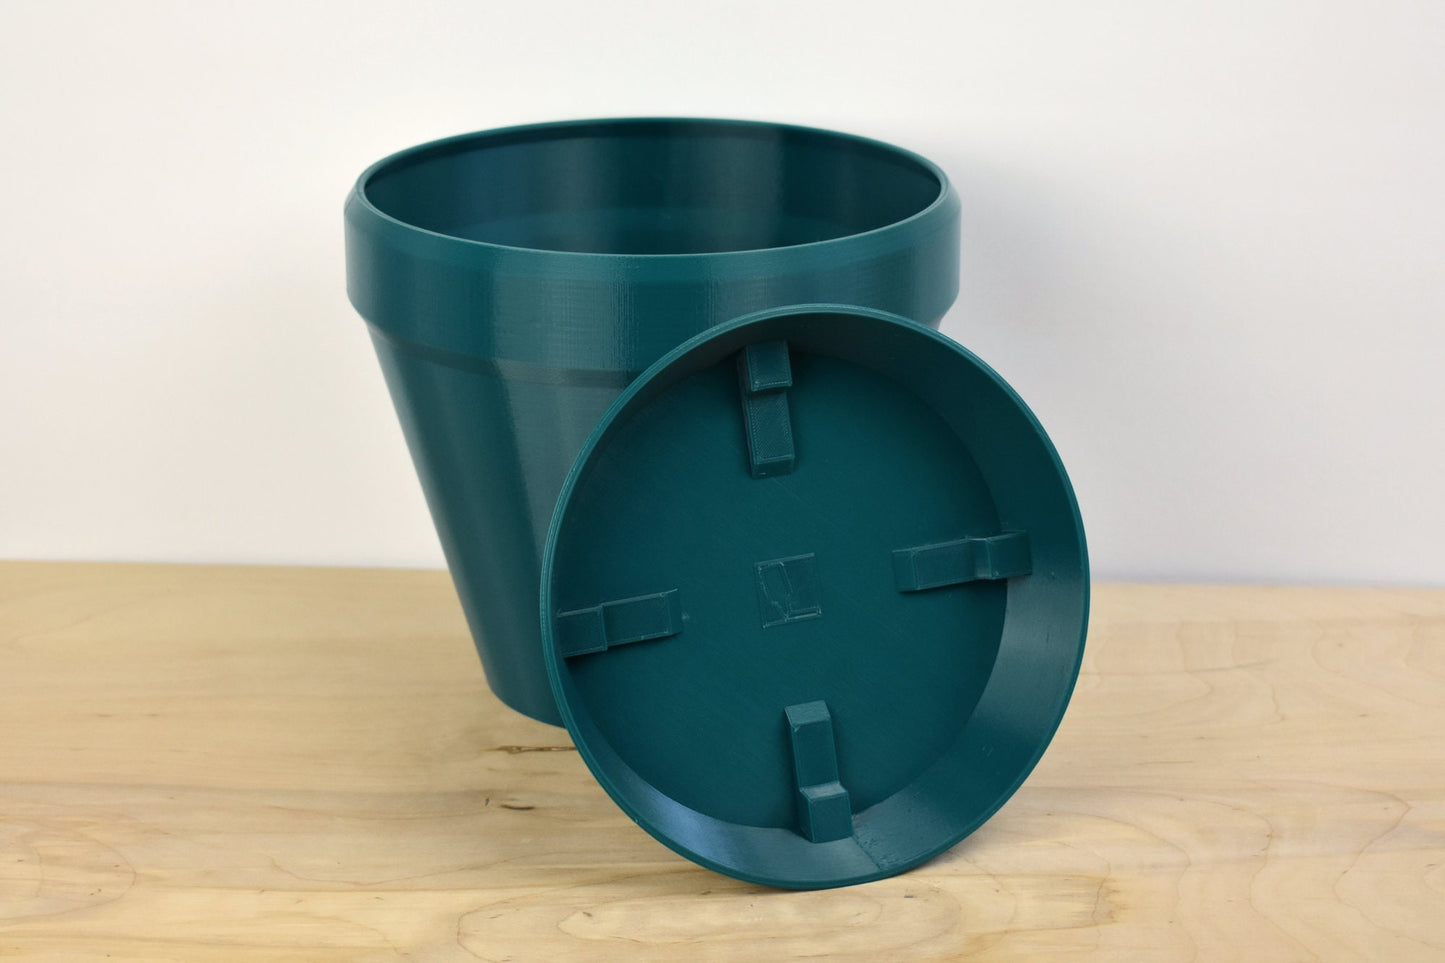 Classic Flower Pot, 8-inch Round Planter, Dark Green, Indoor/Outdoor